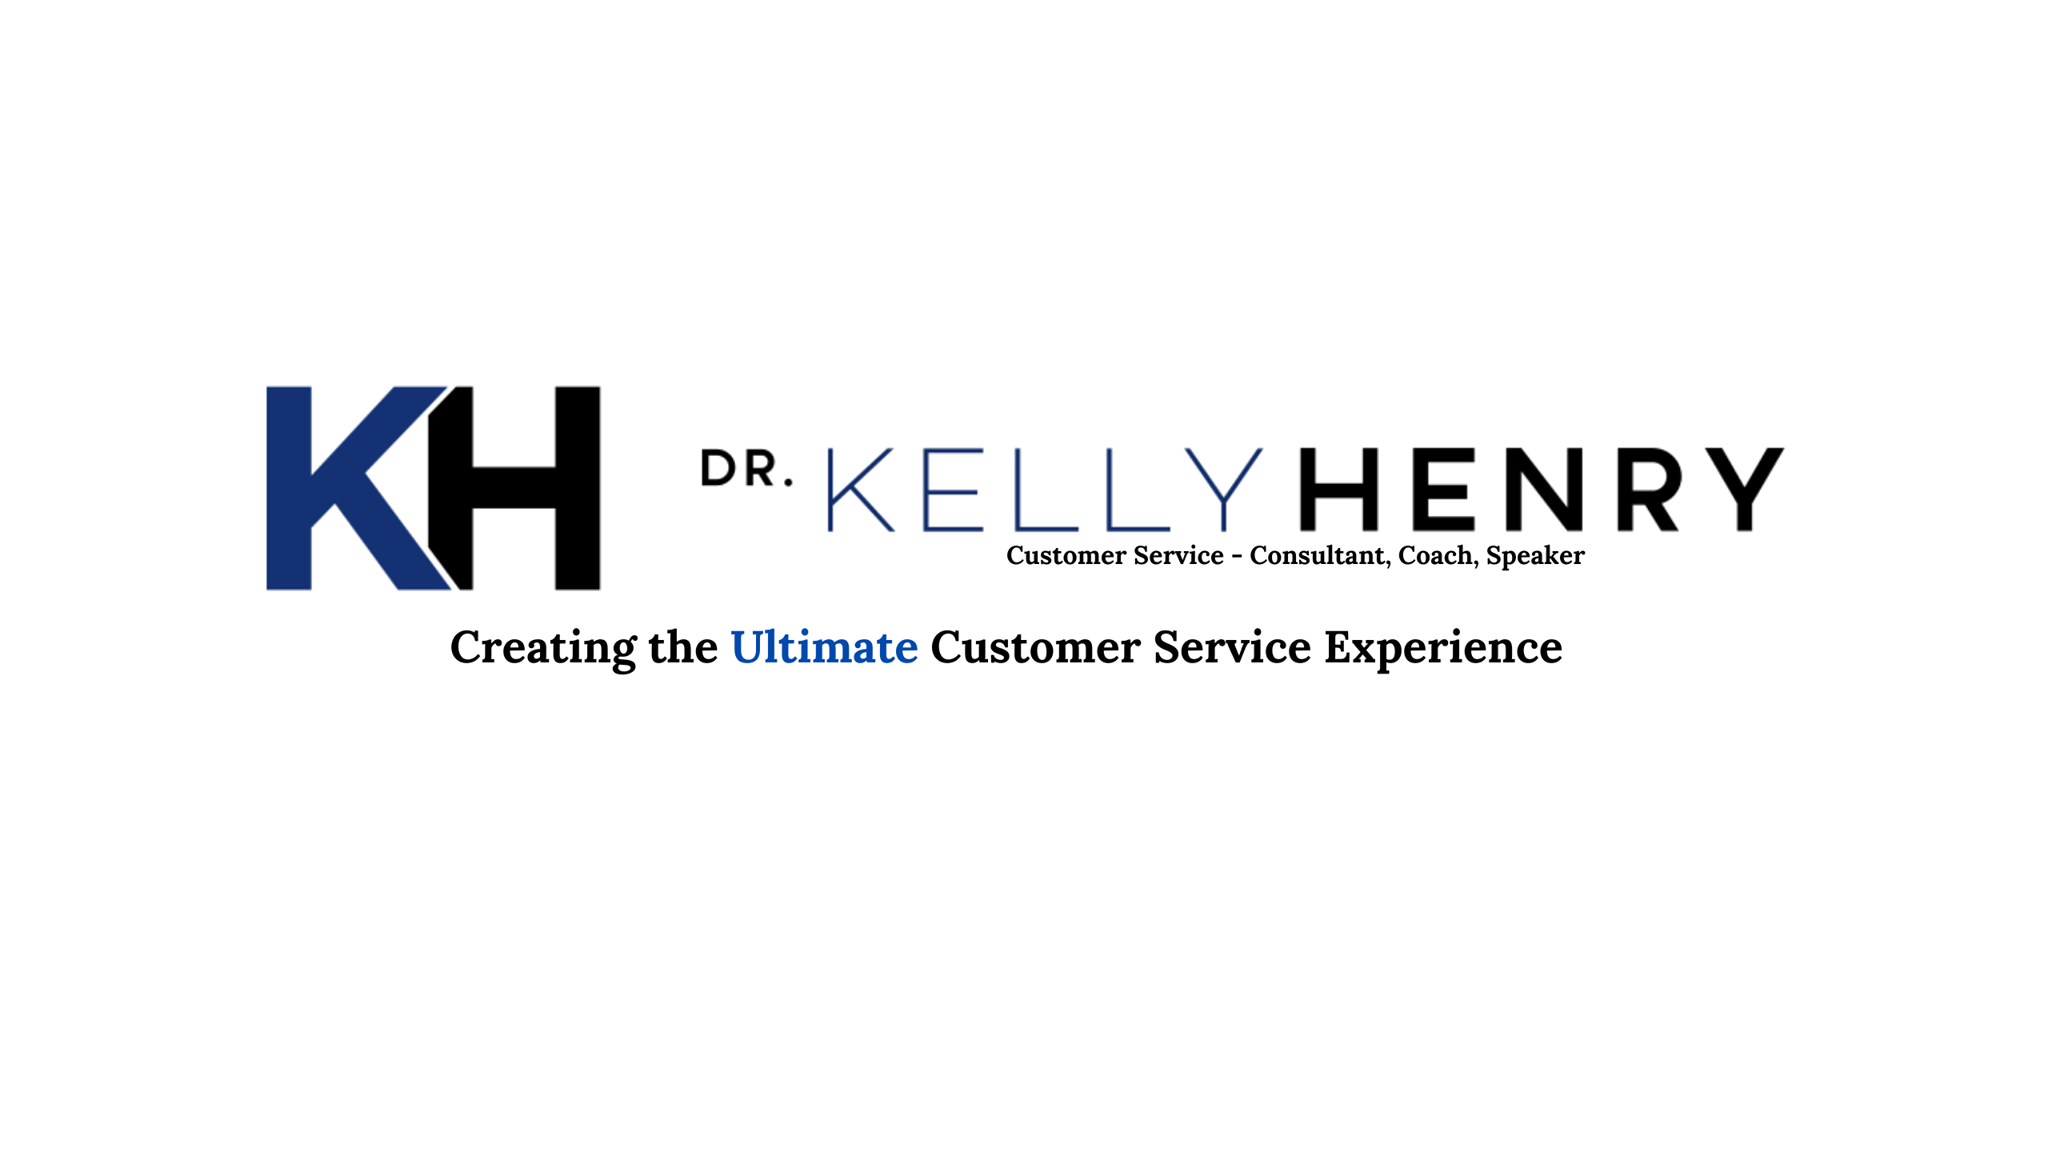 Dr. Kelly Henry